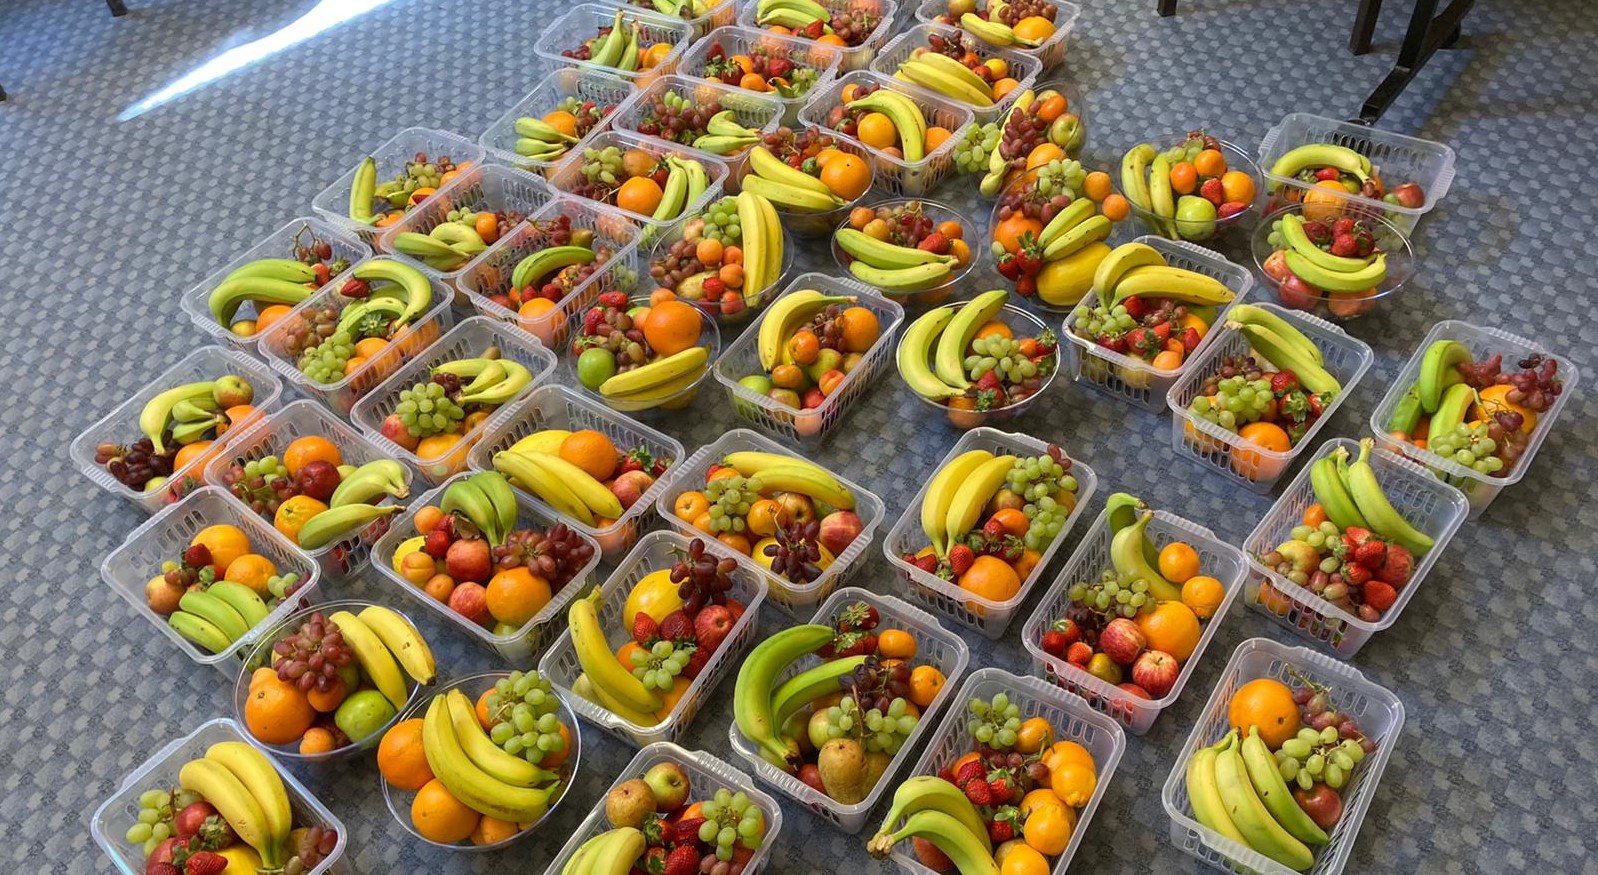 Many baskets of fruit